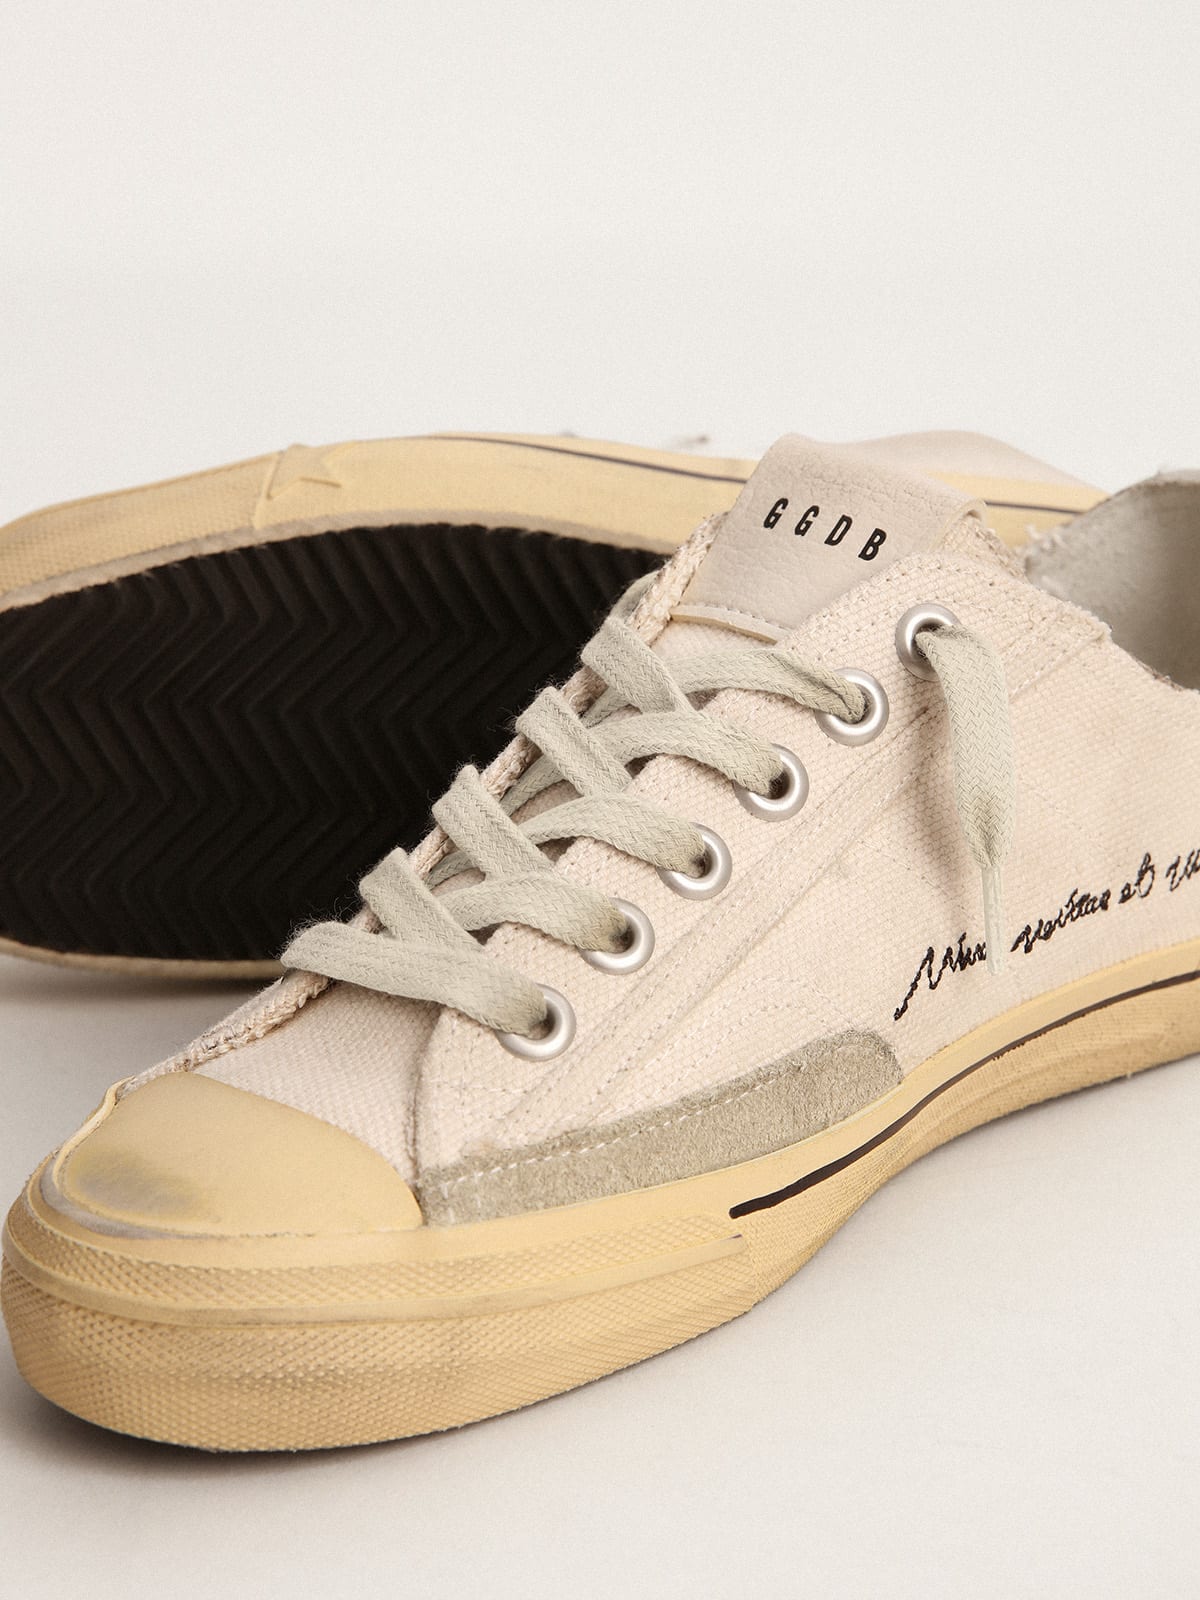 Golden Goose - Sneakers V-Star LTD avec étoile en daim noir et inscription brodée in 